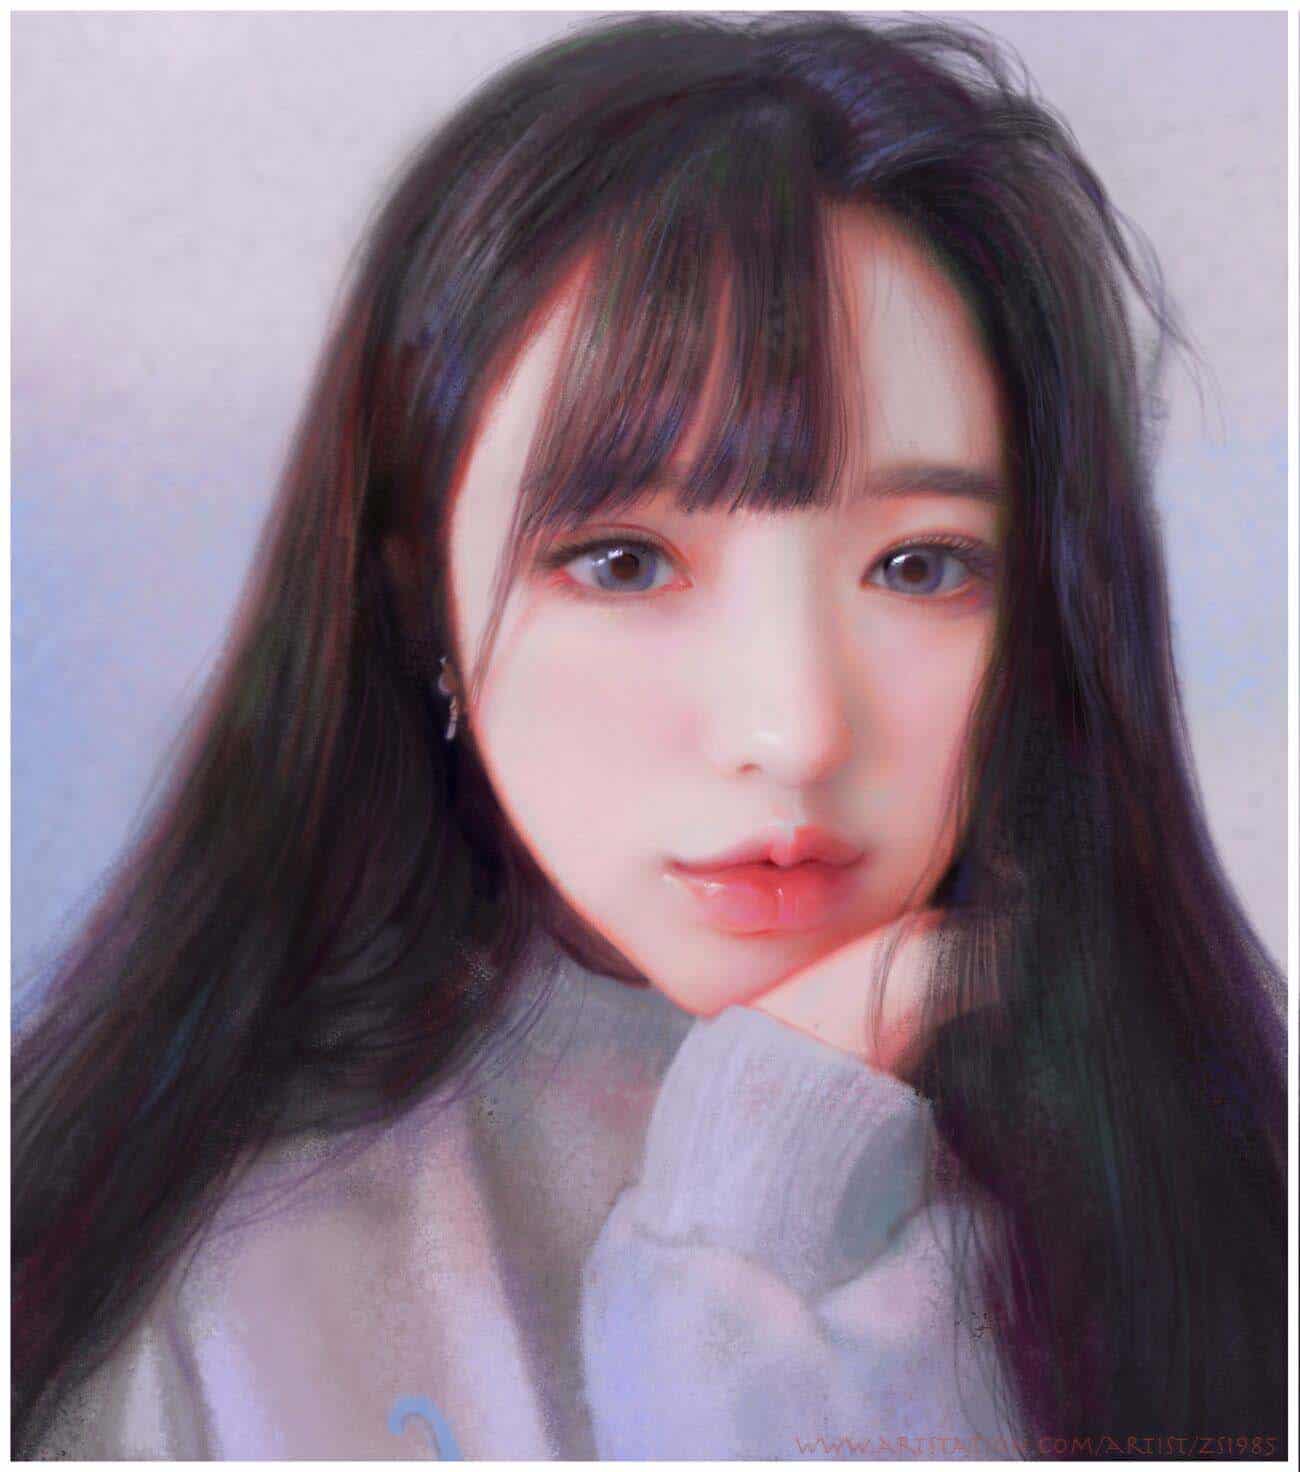 Ruoxin Zhang | Paintable.cc Digital Painting Inspiration - Learn the Art of Digital Painting! #digitalpainting #digitalart